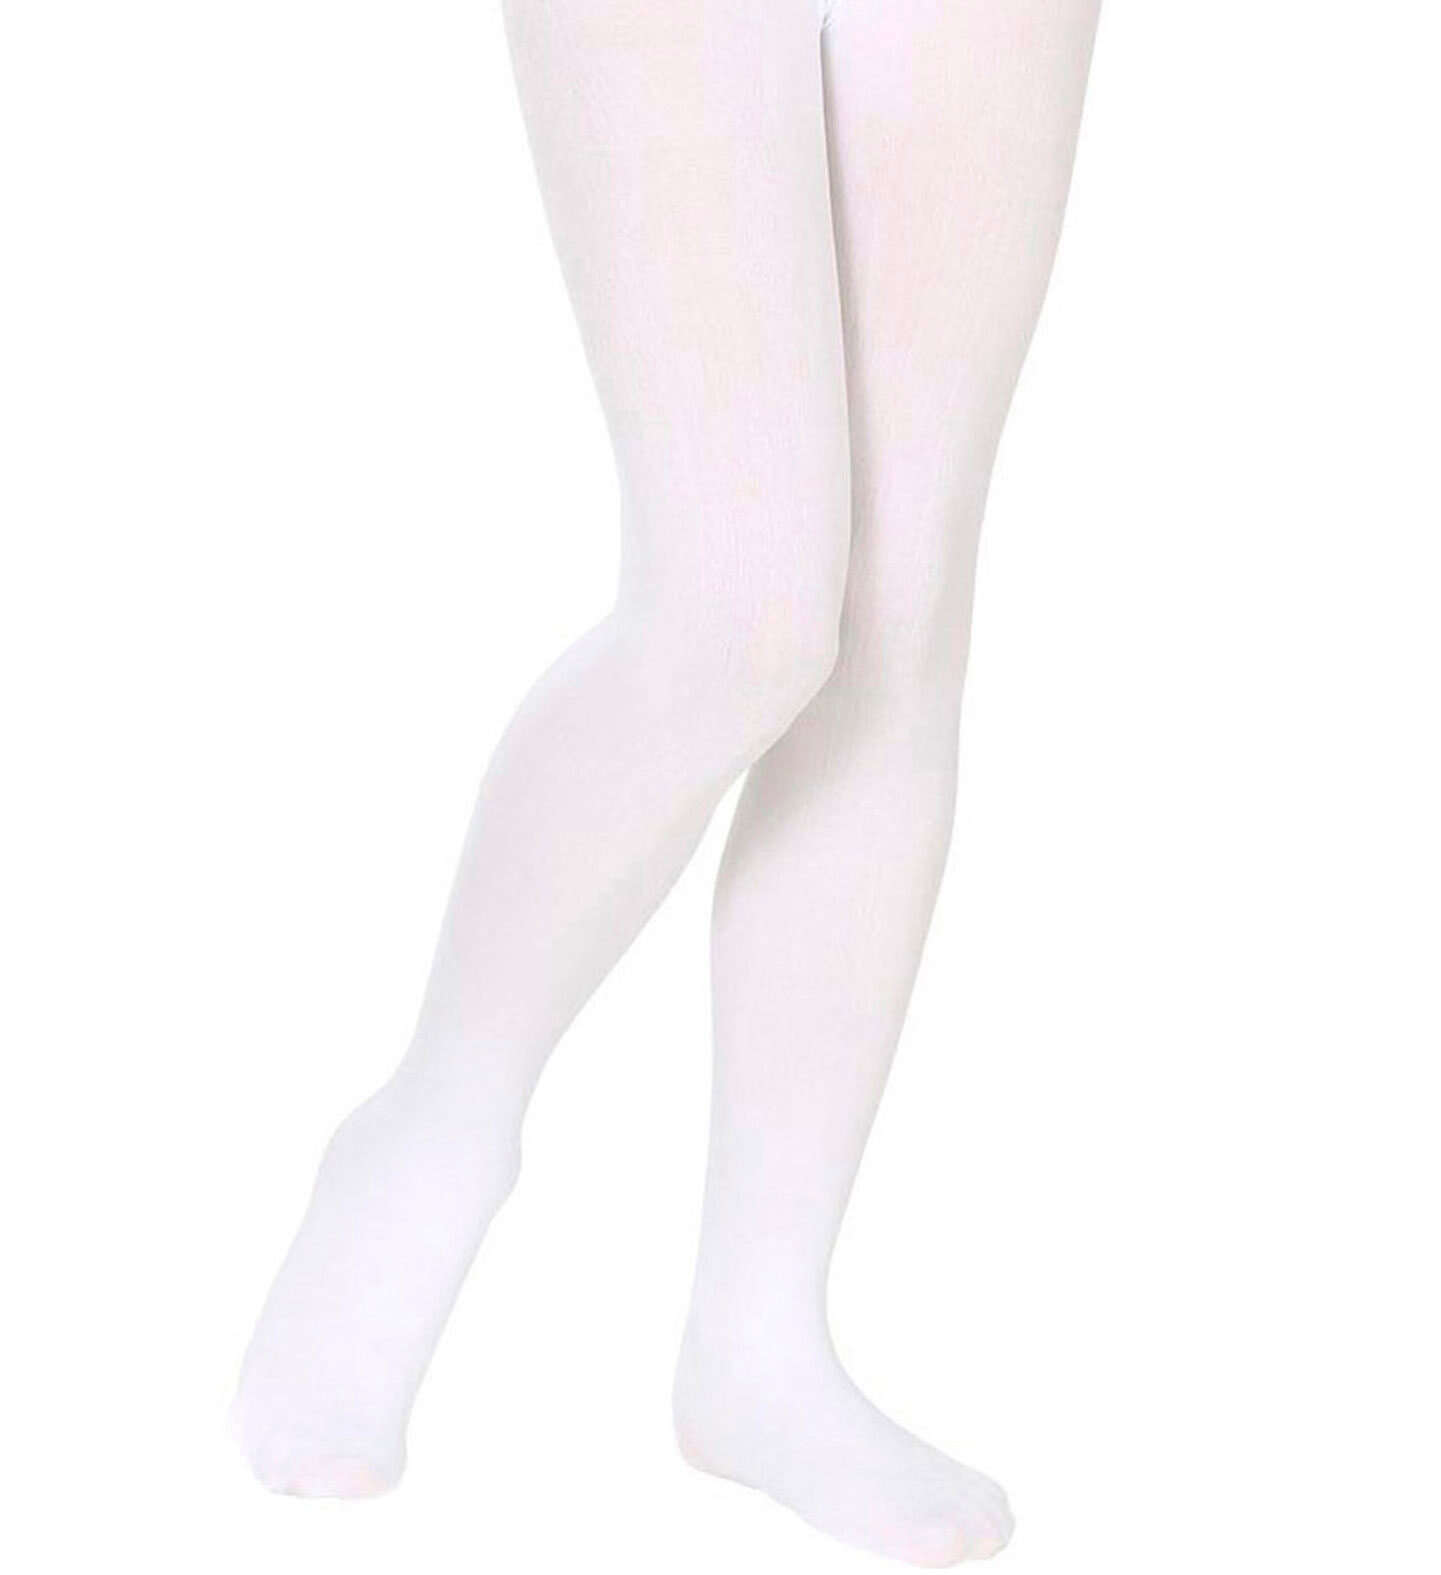 Ciorapi copil albi 10 - 11 ani / 150 cm|11 - 13 ani / 158 cm|4 - 5 ani / 116cm|5 - 7 ani / 128 cm|7 - 8 ani / 134 cm|8 - 10 ani / 140 cm